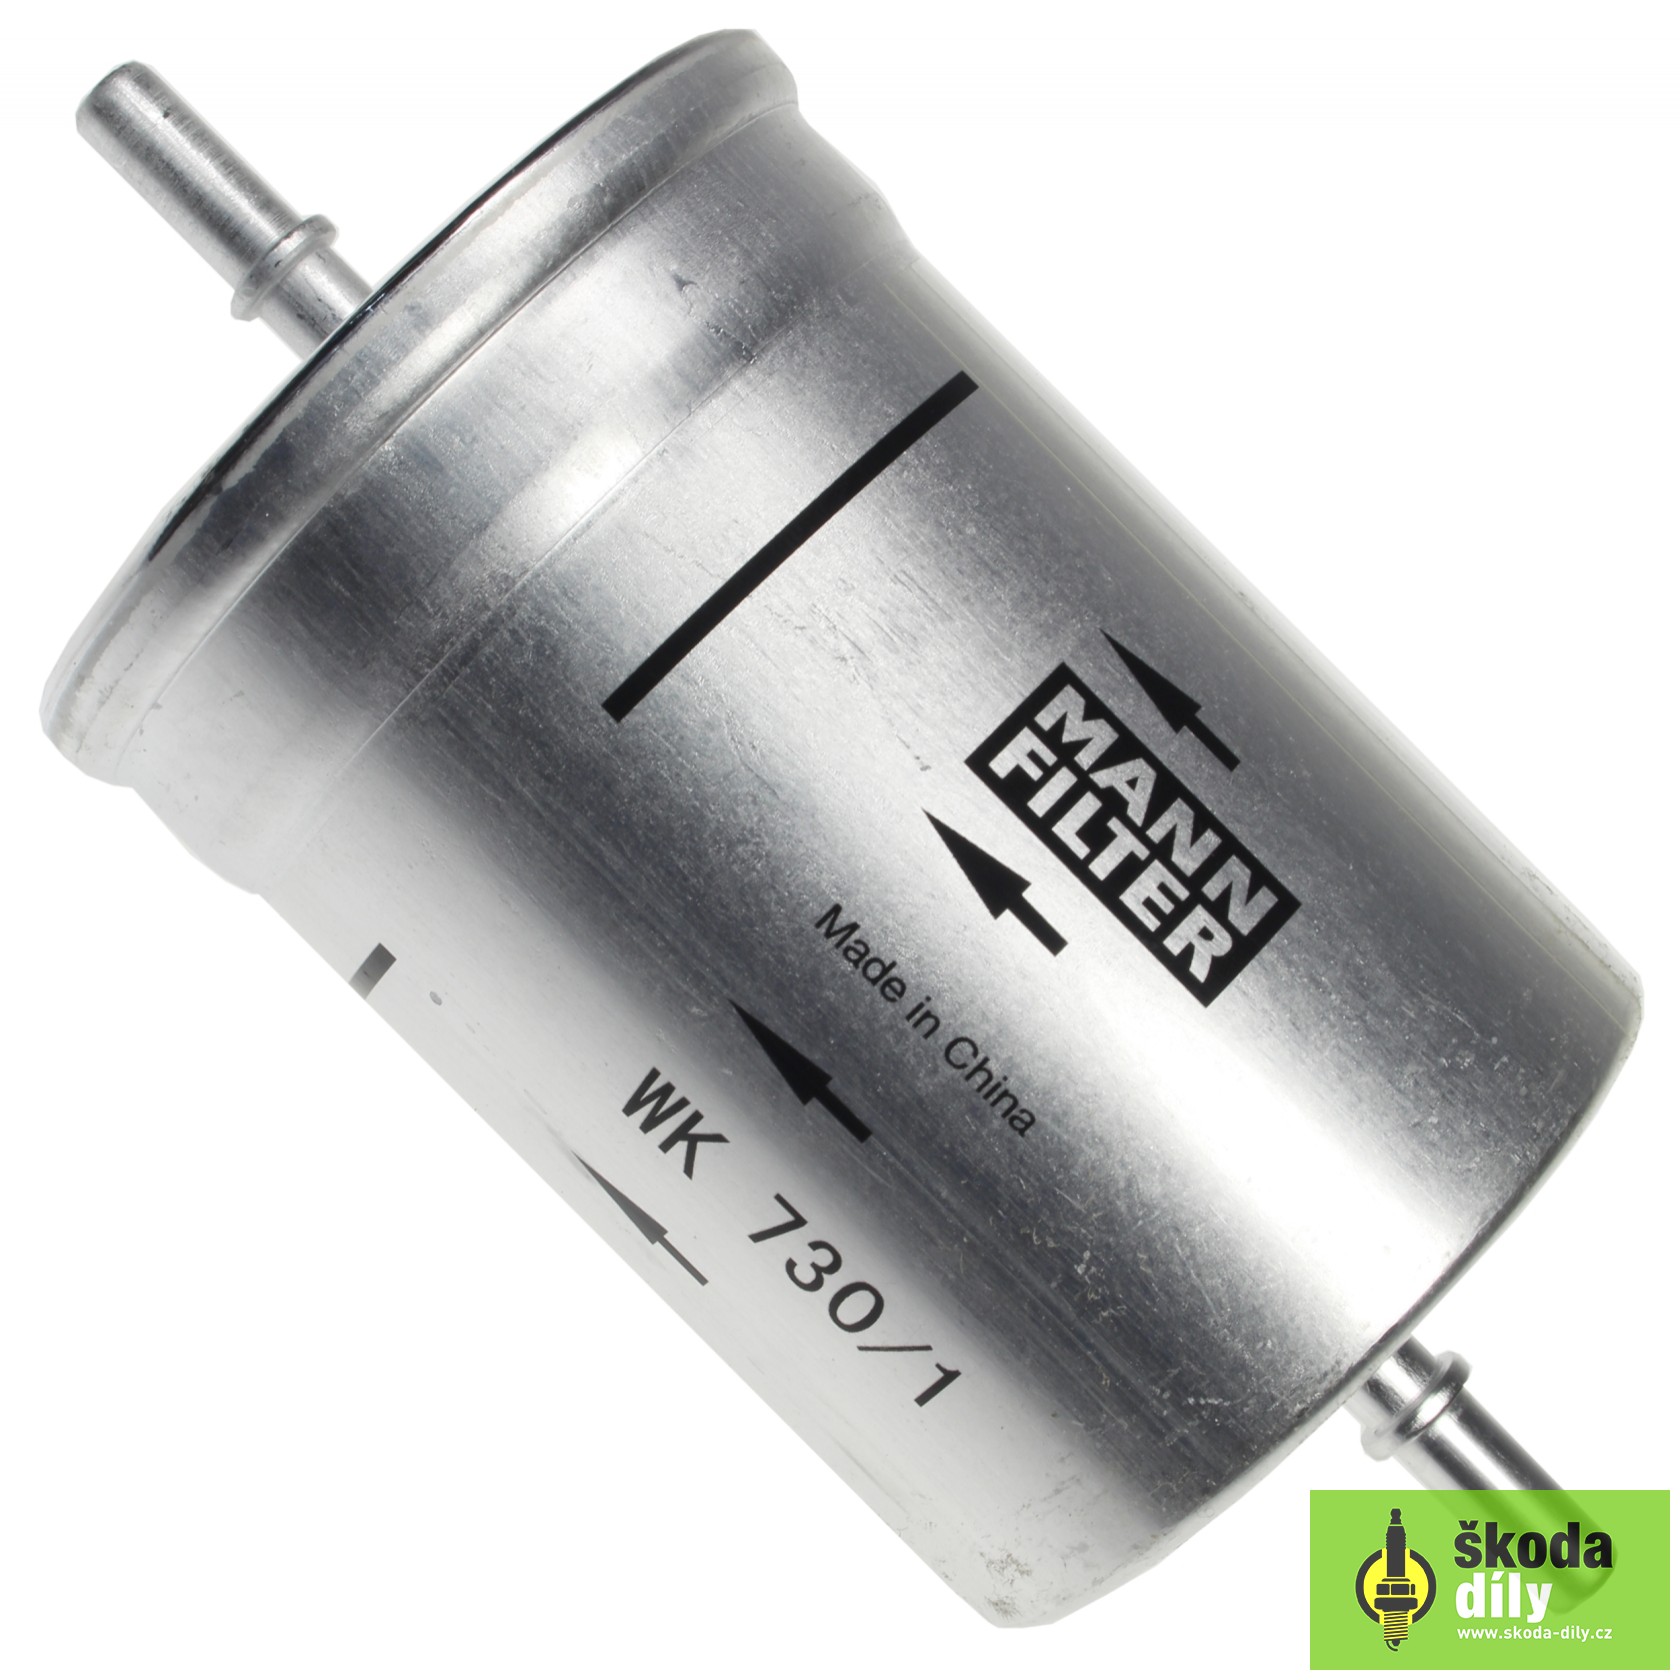 WK730/1 Genuine OE Quality MANN Fuel Filter